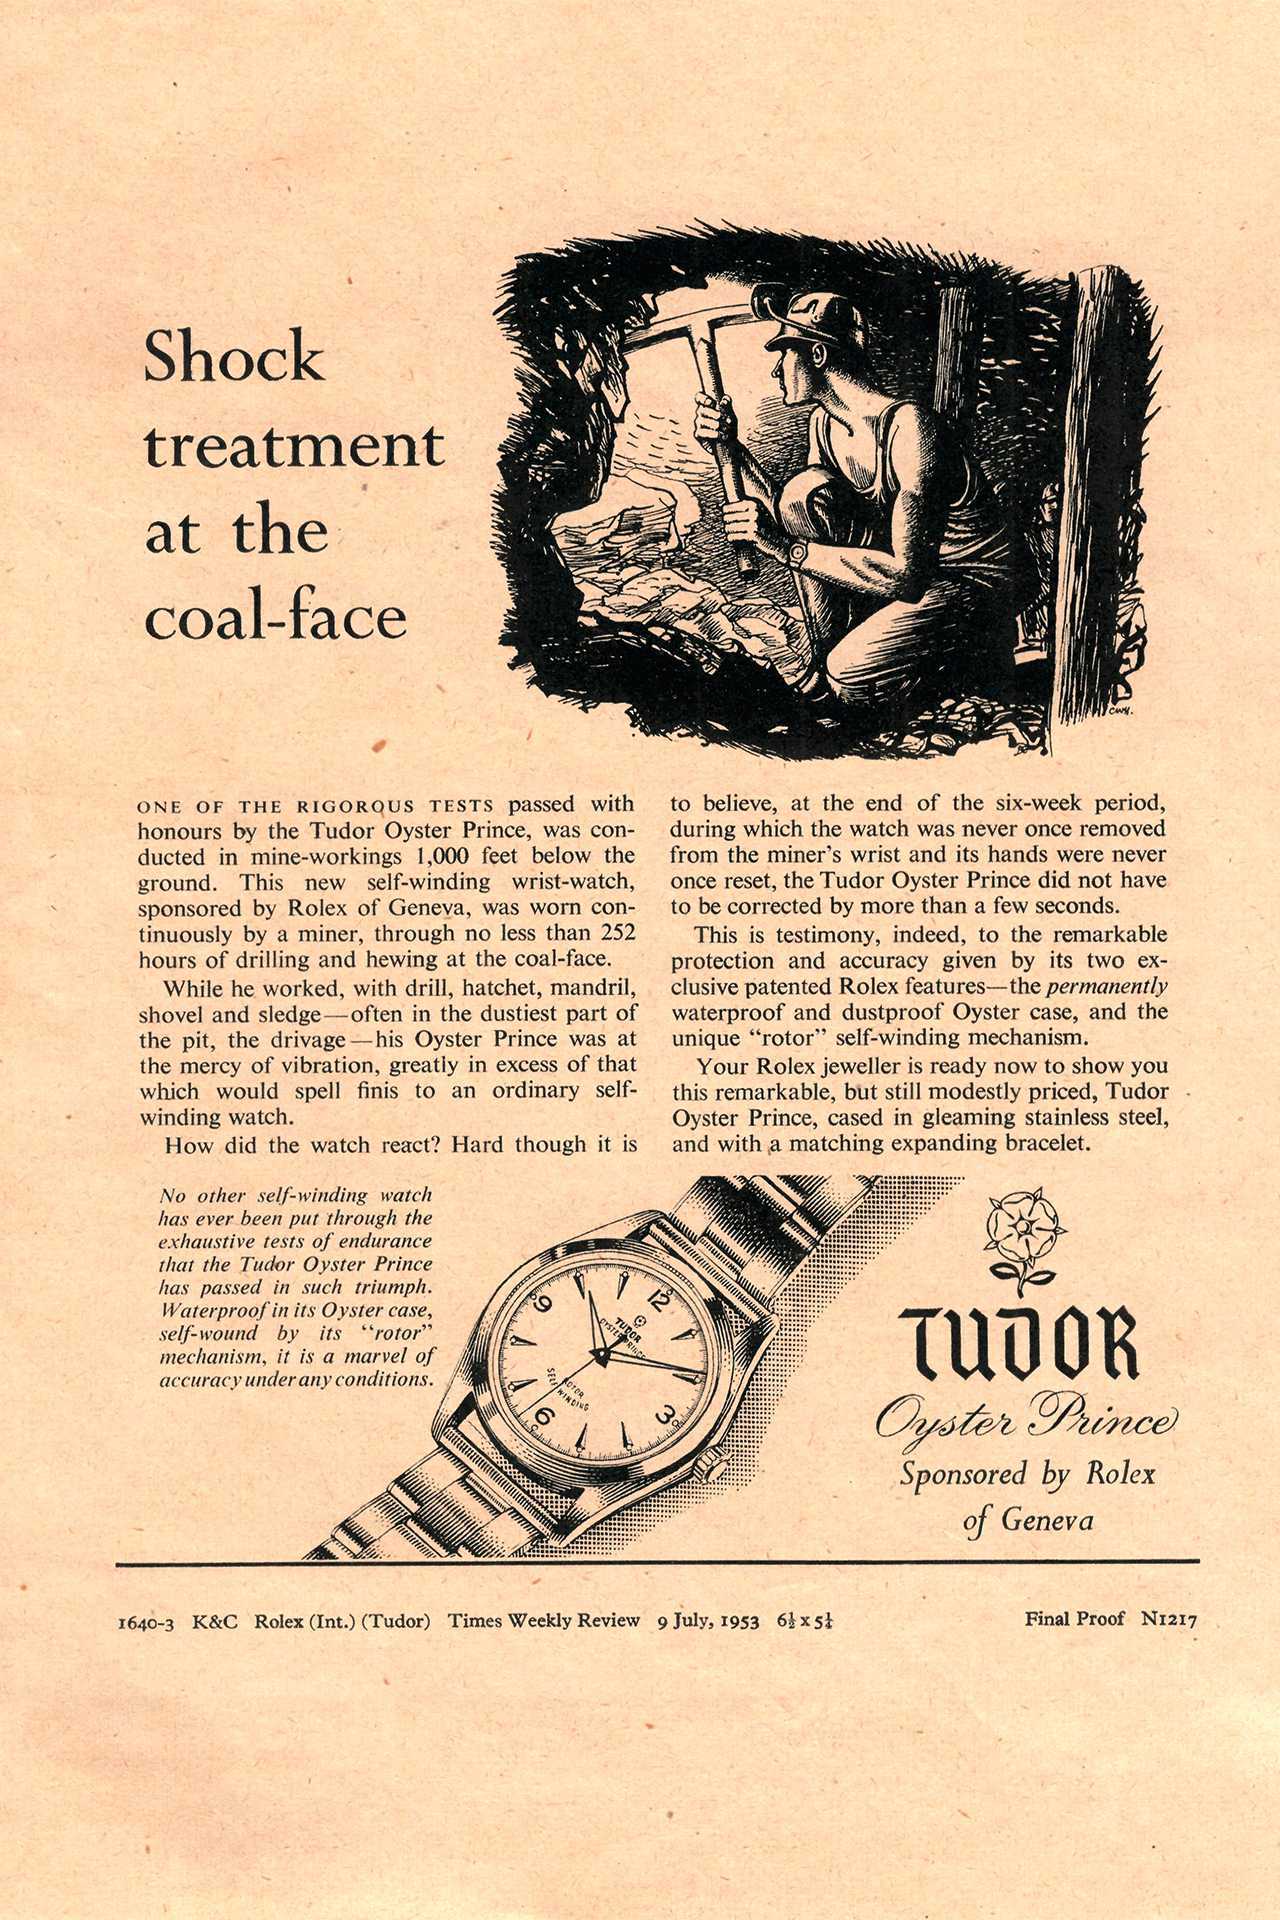 Tudor vintage advertisements